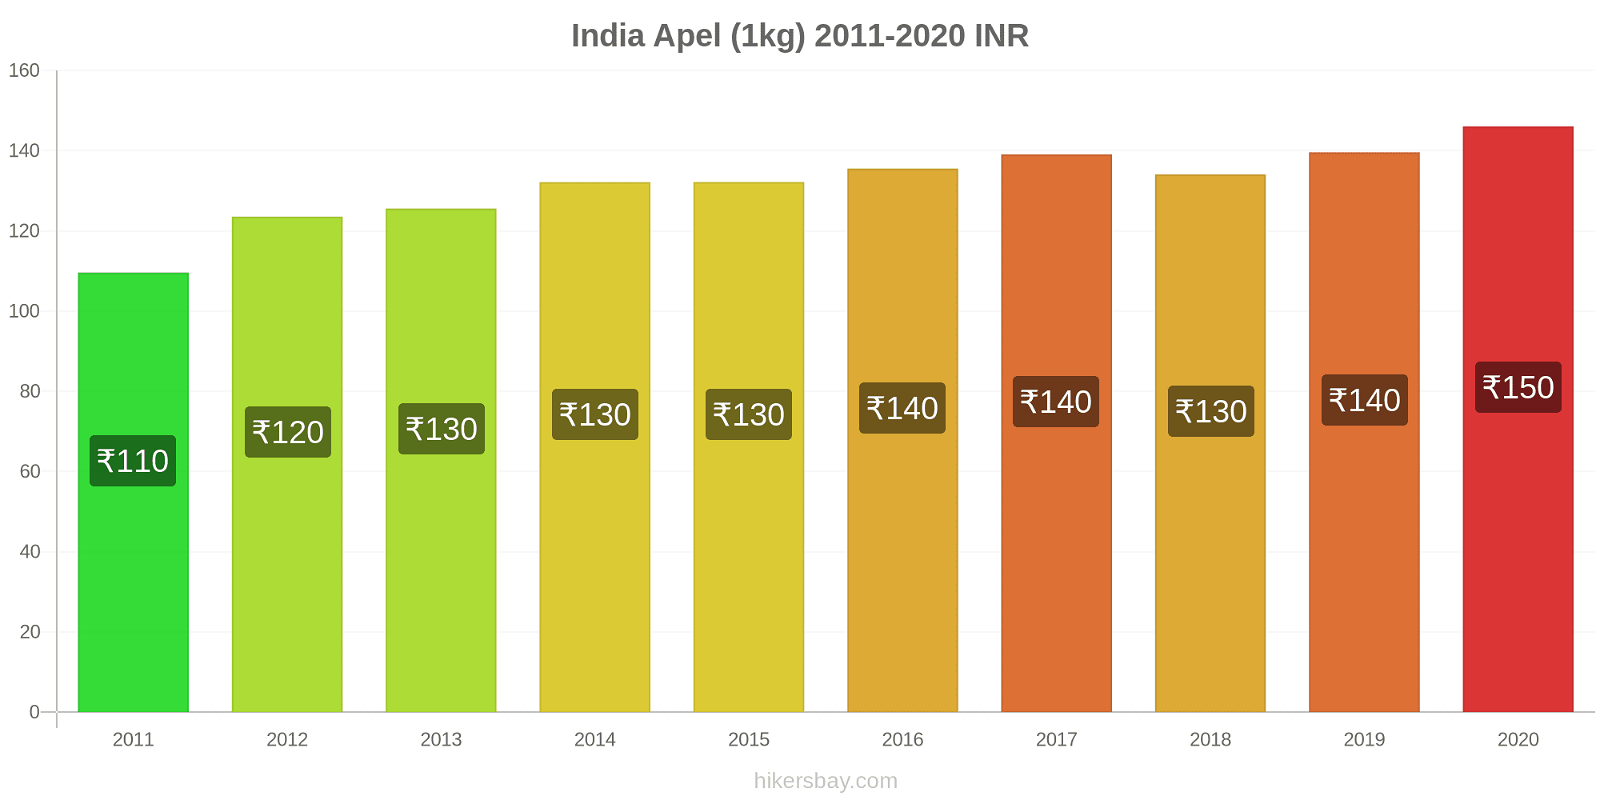 India perubahan harga Apel (1kg) hikersbay.com